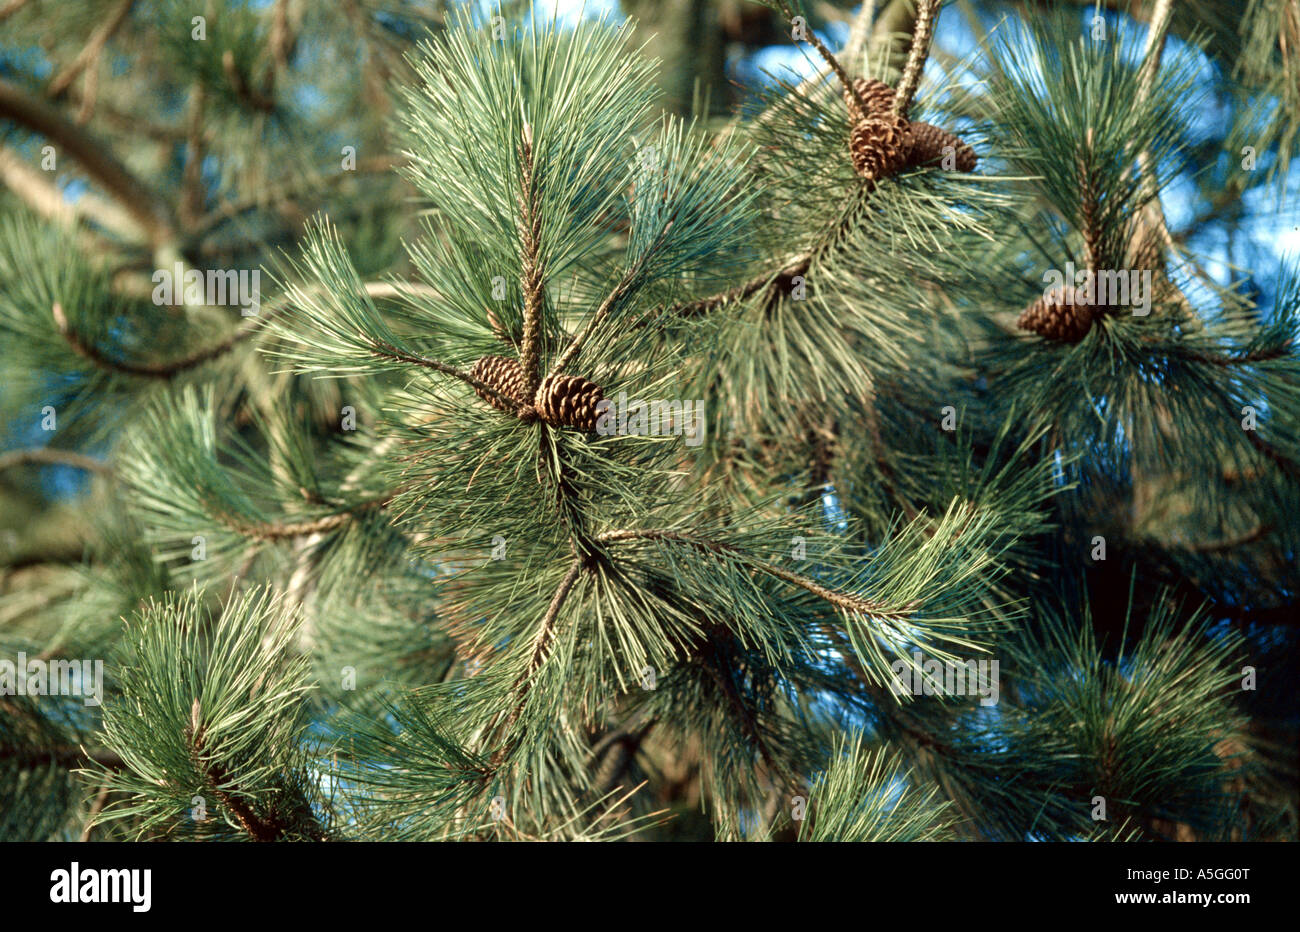 ponderosa pine, western yellow pine, blackjack pine, bull pine (Pinus ponderosa), branch with cones Stock Photo